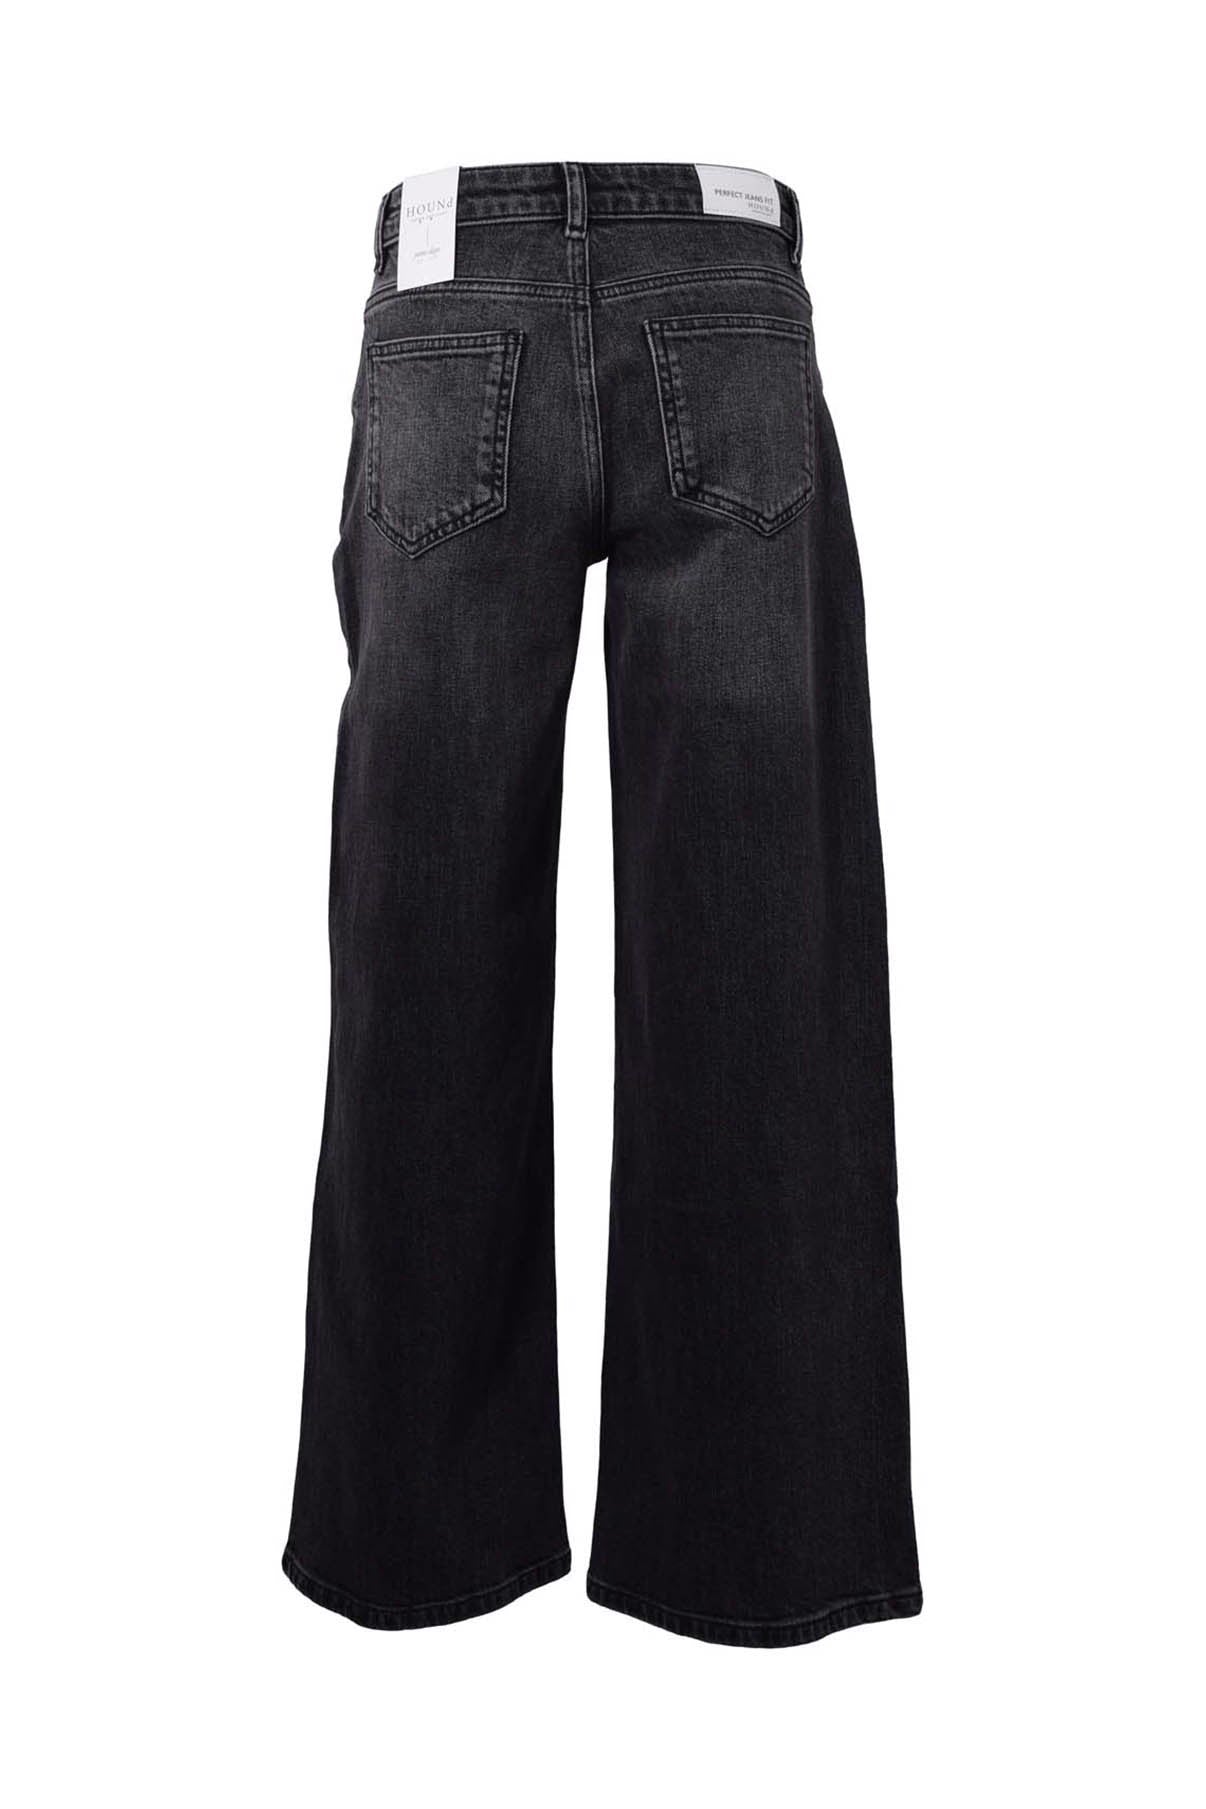 HOUND GIRL Jeans Extra Wide denim